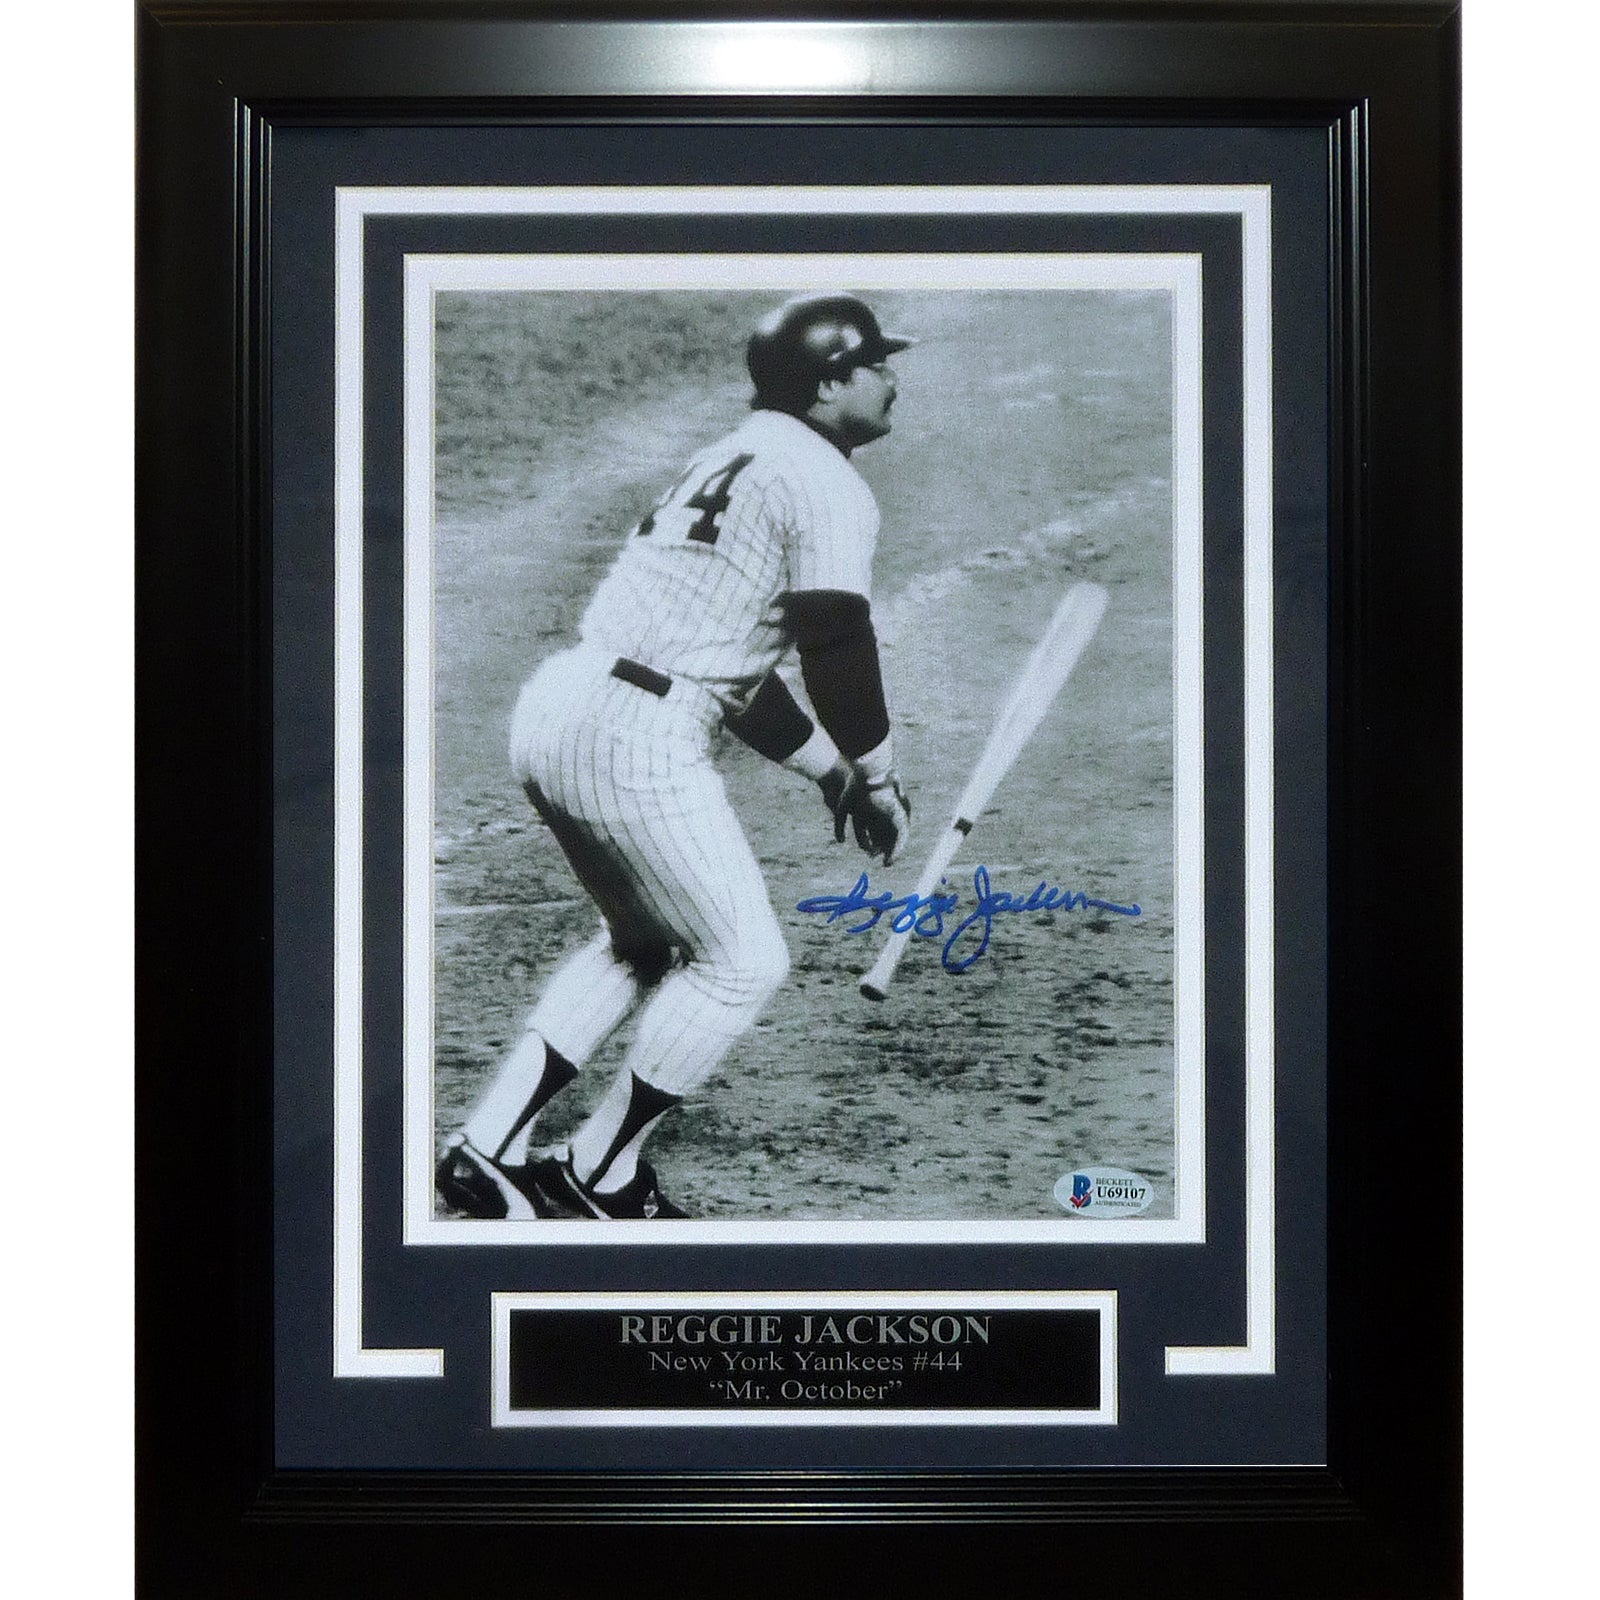 Reggie Jackson Autographed New York Yankees (WS HR) Deluxe Framed 8x10 Photo - Beckett